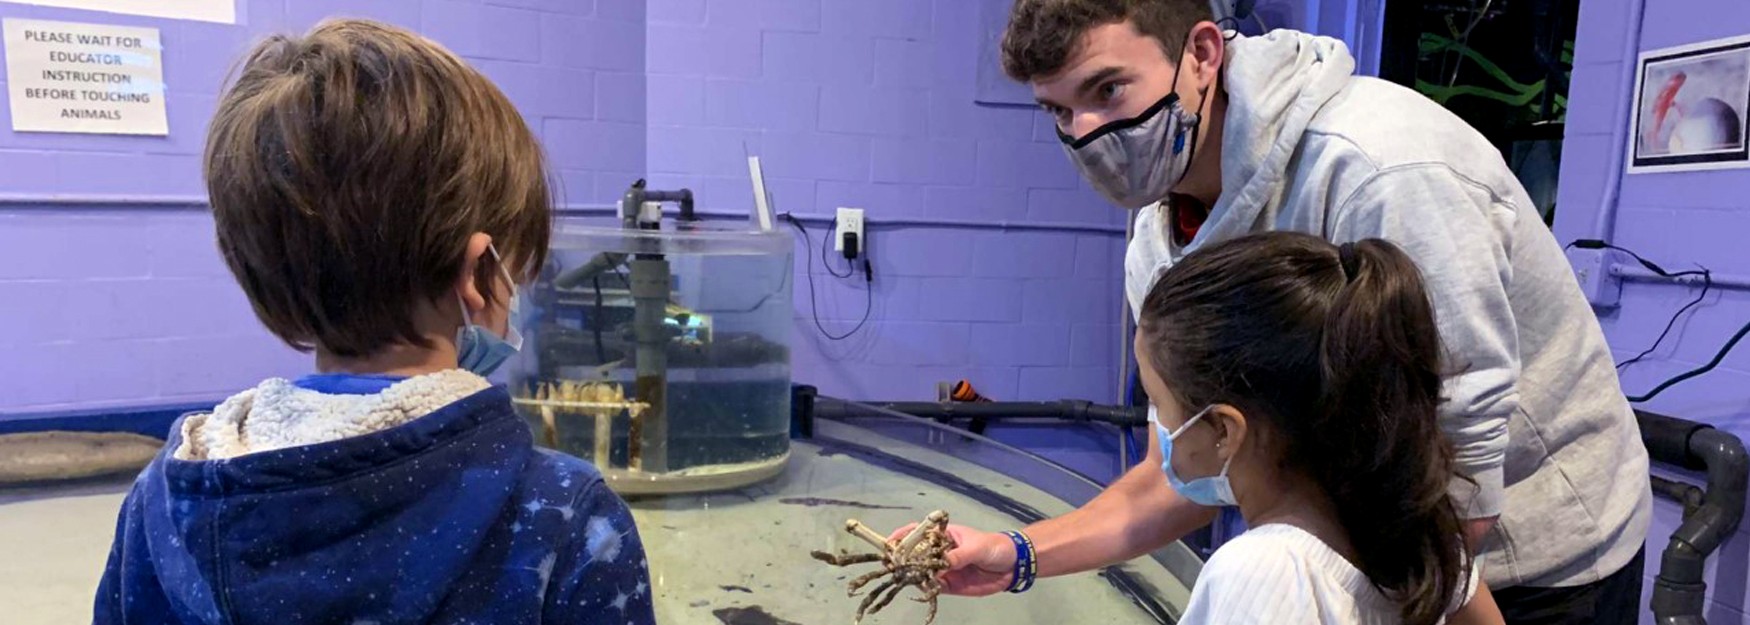 U N E Animal Behavior and Marine Science student Will Szumita helps elementary children at an aquarium during his summer internship